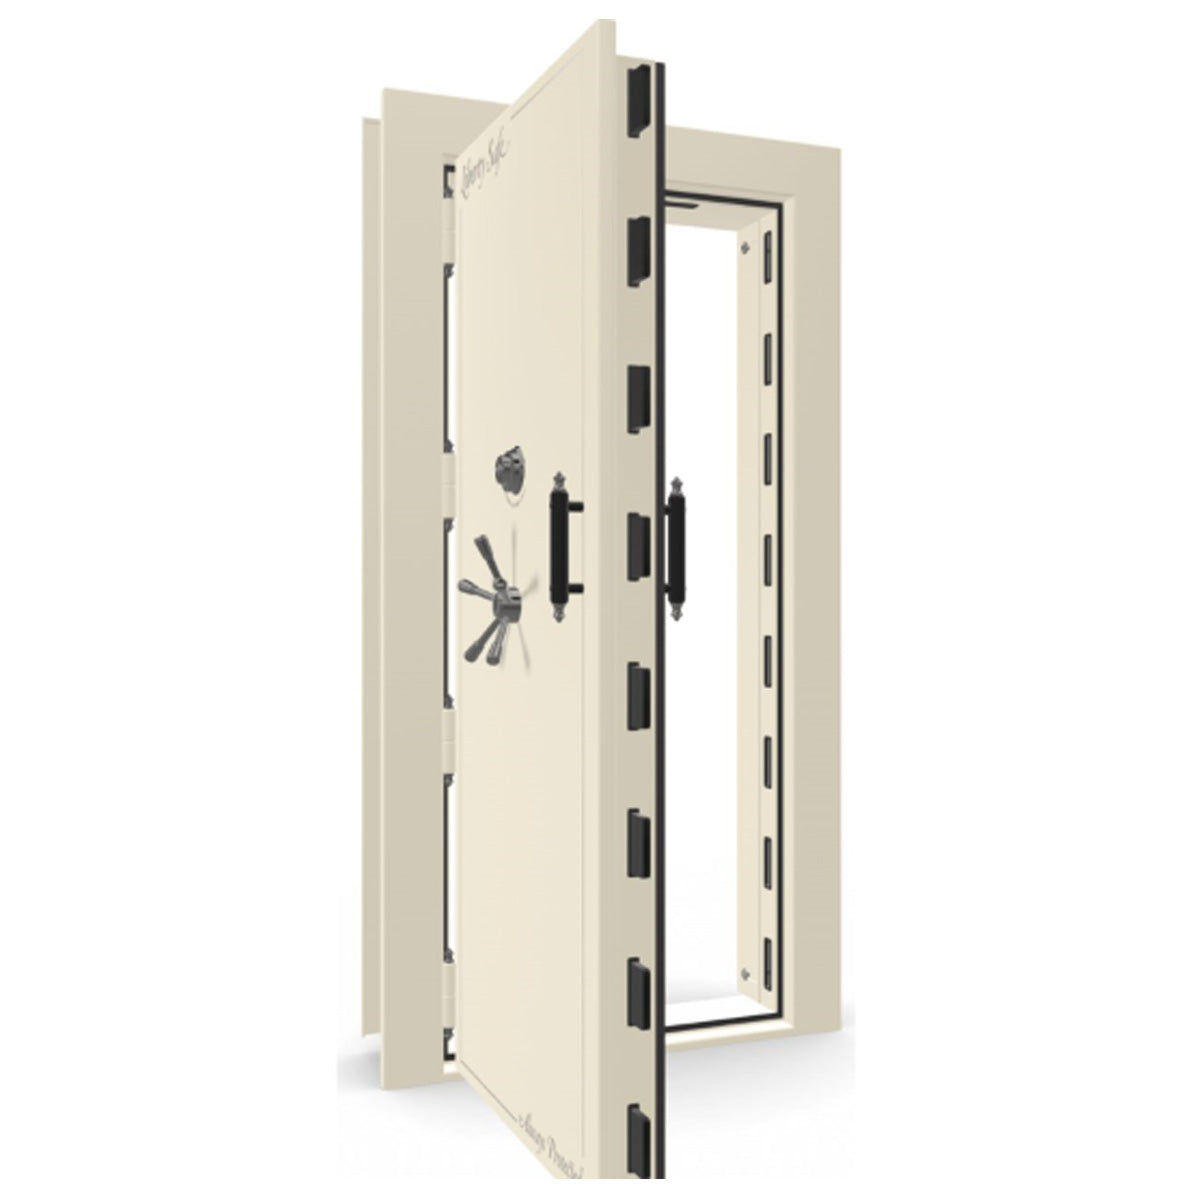 The Beast Vault Door in White Gloss with Black Chrome Electronic Lock, Left Outswing, door open.